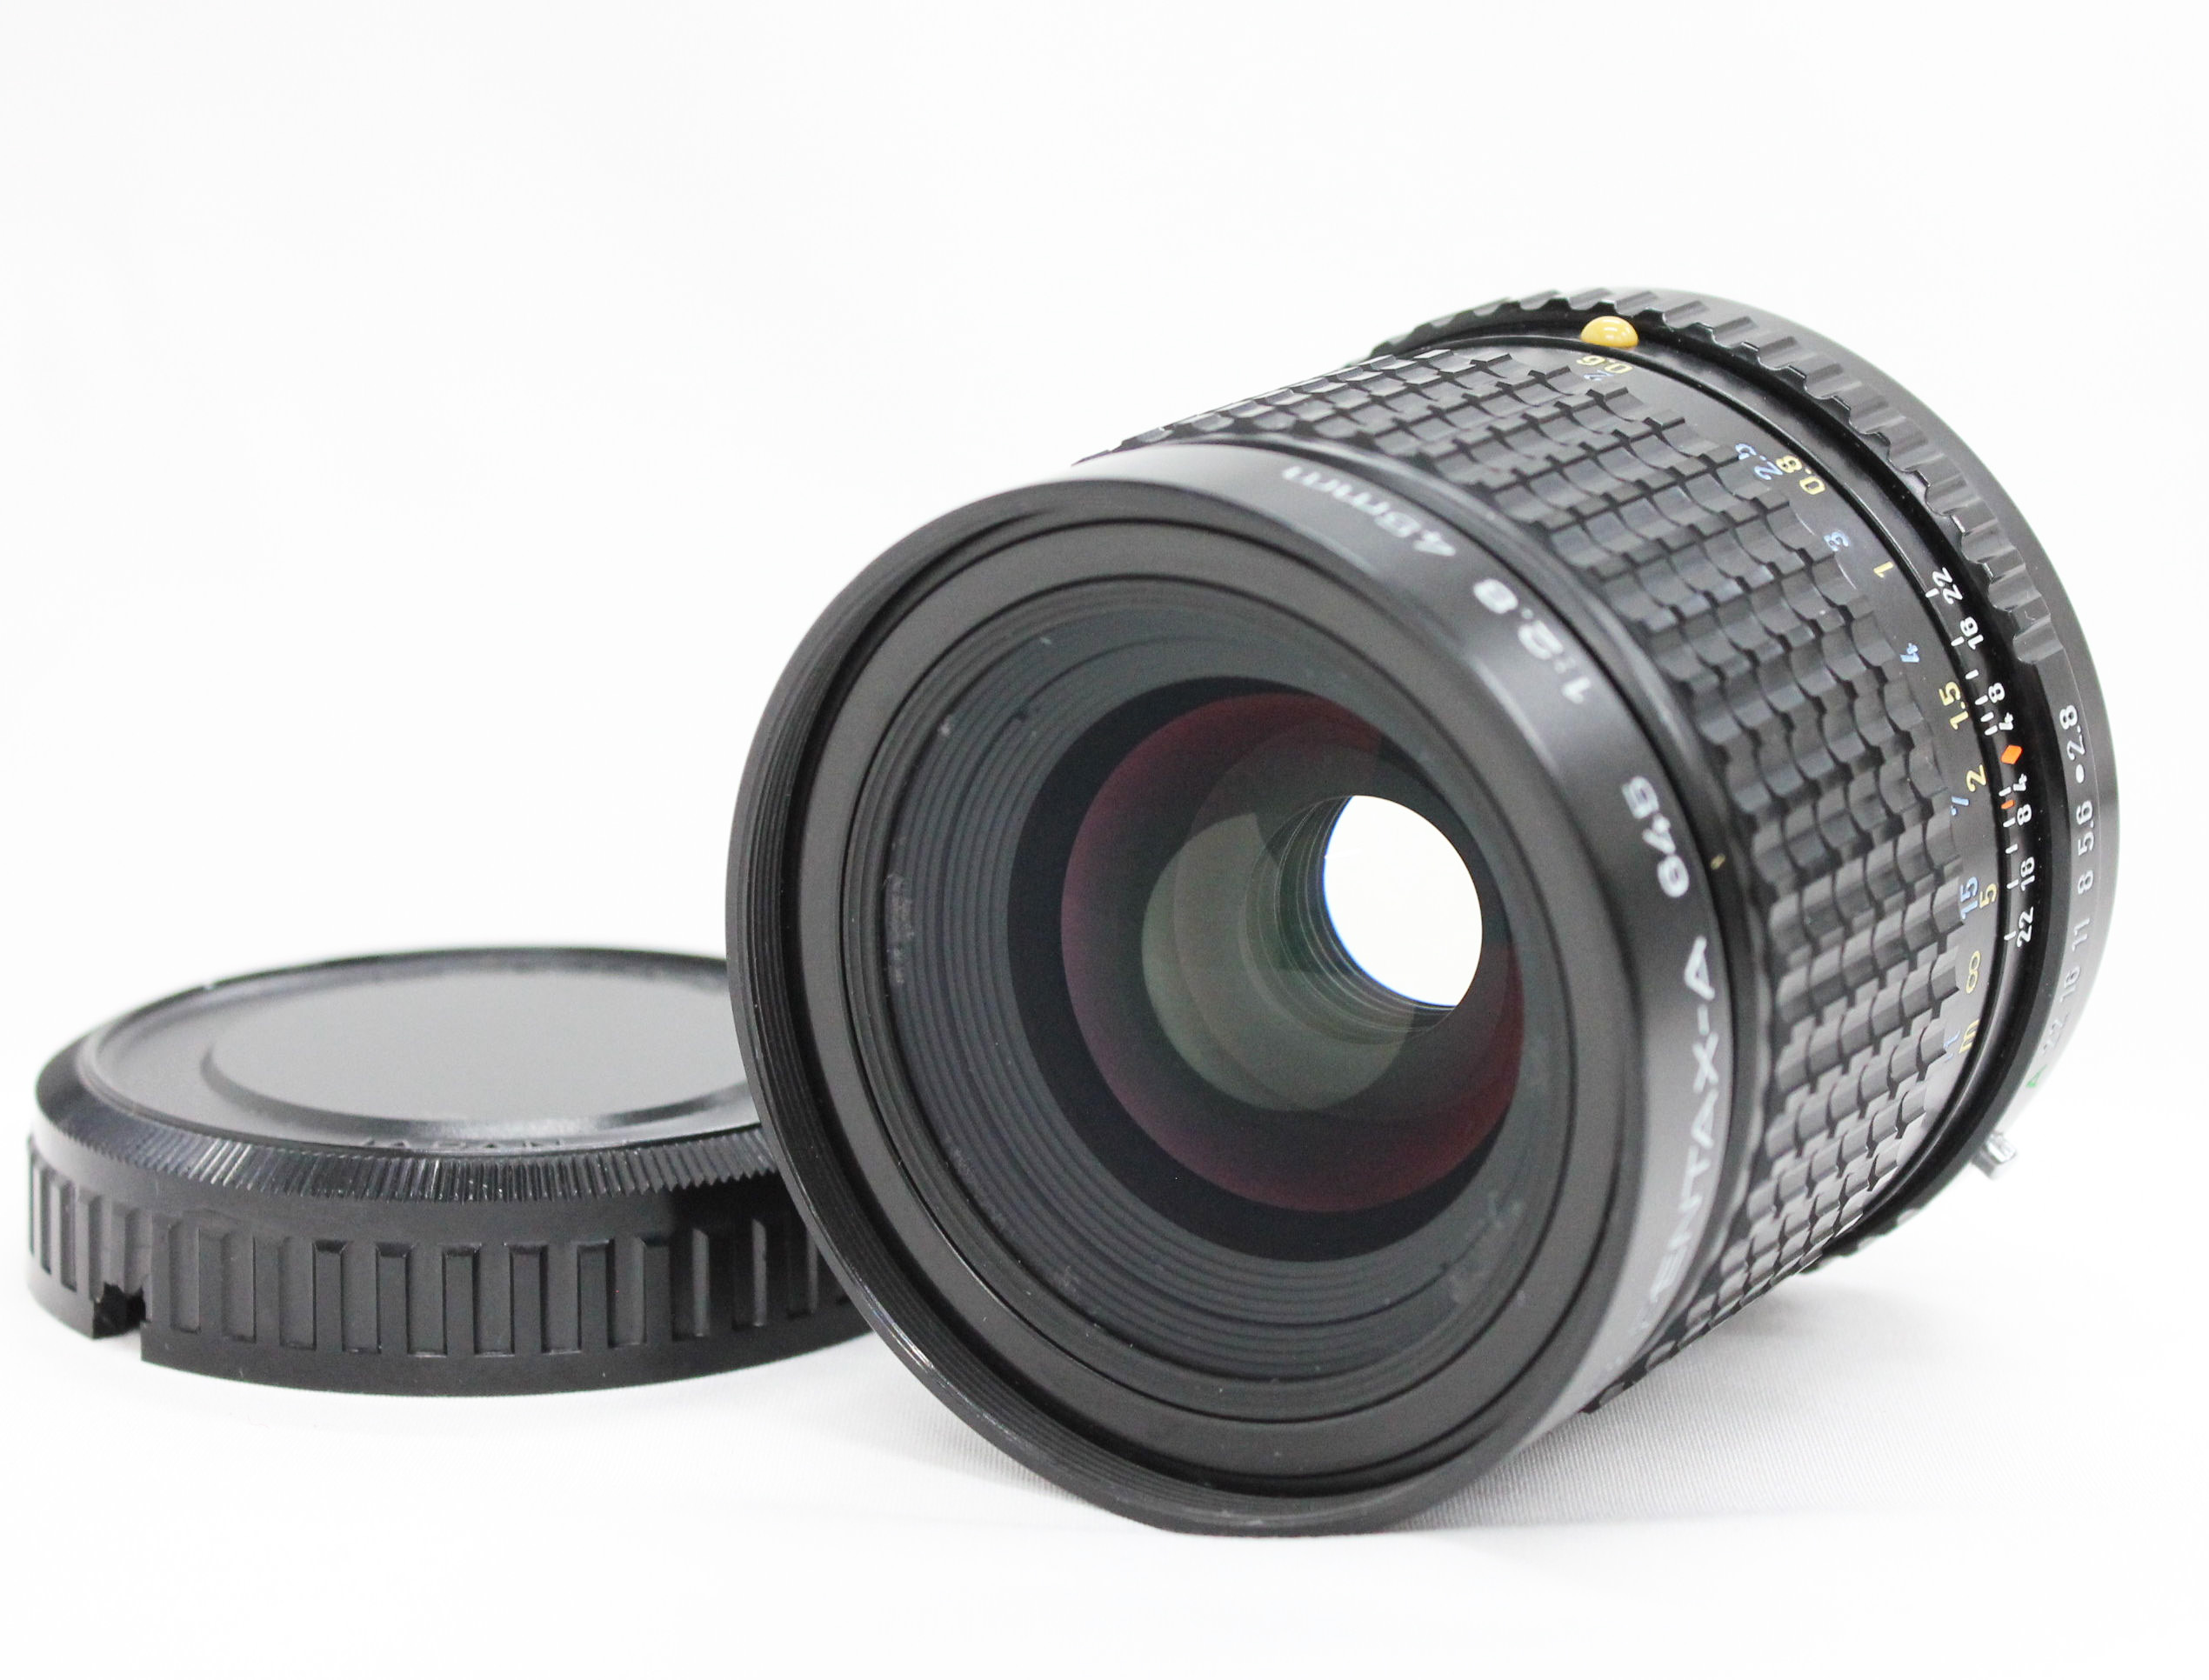  Pentax SMC Pentax-A 645 45mm F/2.8 MF Lens from Japan Photo 0